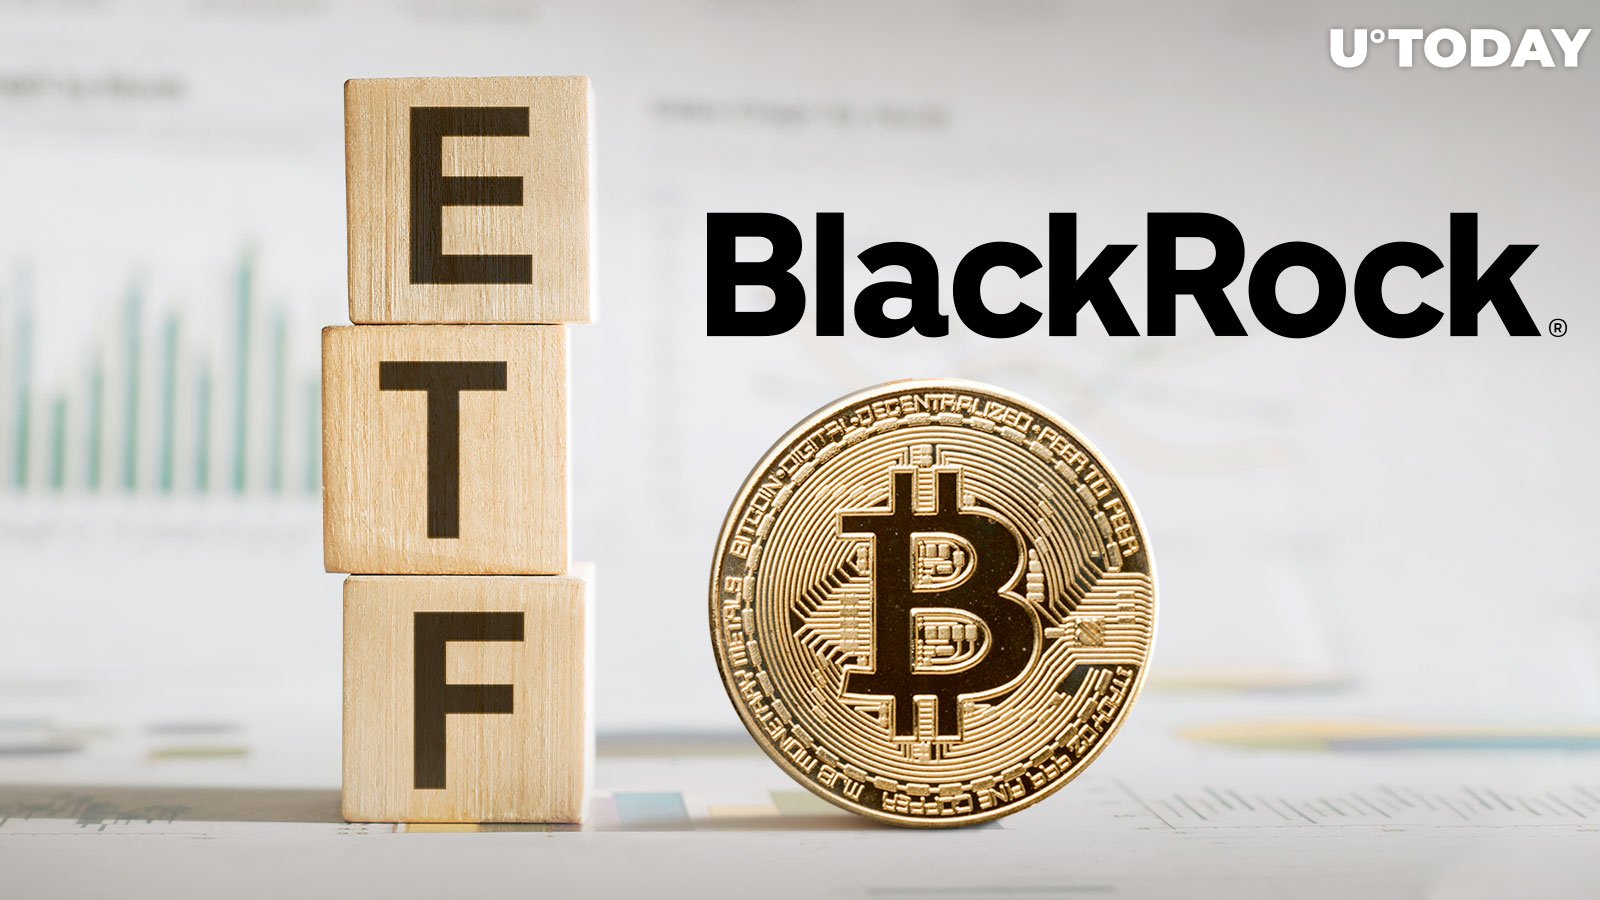 BlackRock’s Bitcoin ETF Extends Its Inflow Streak